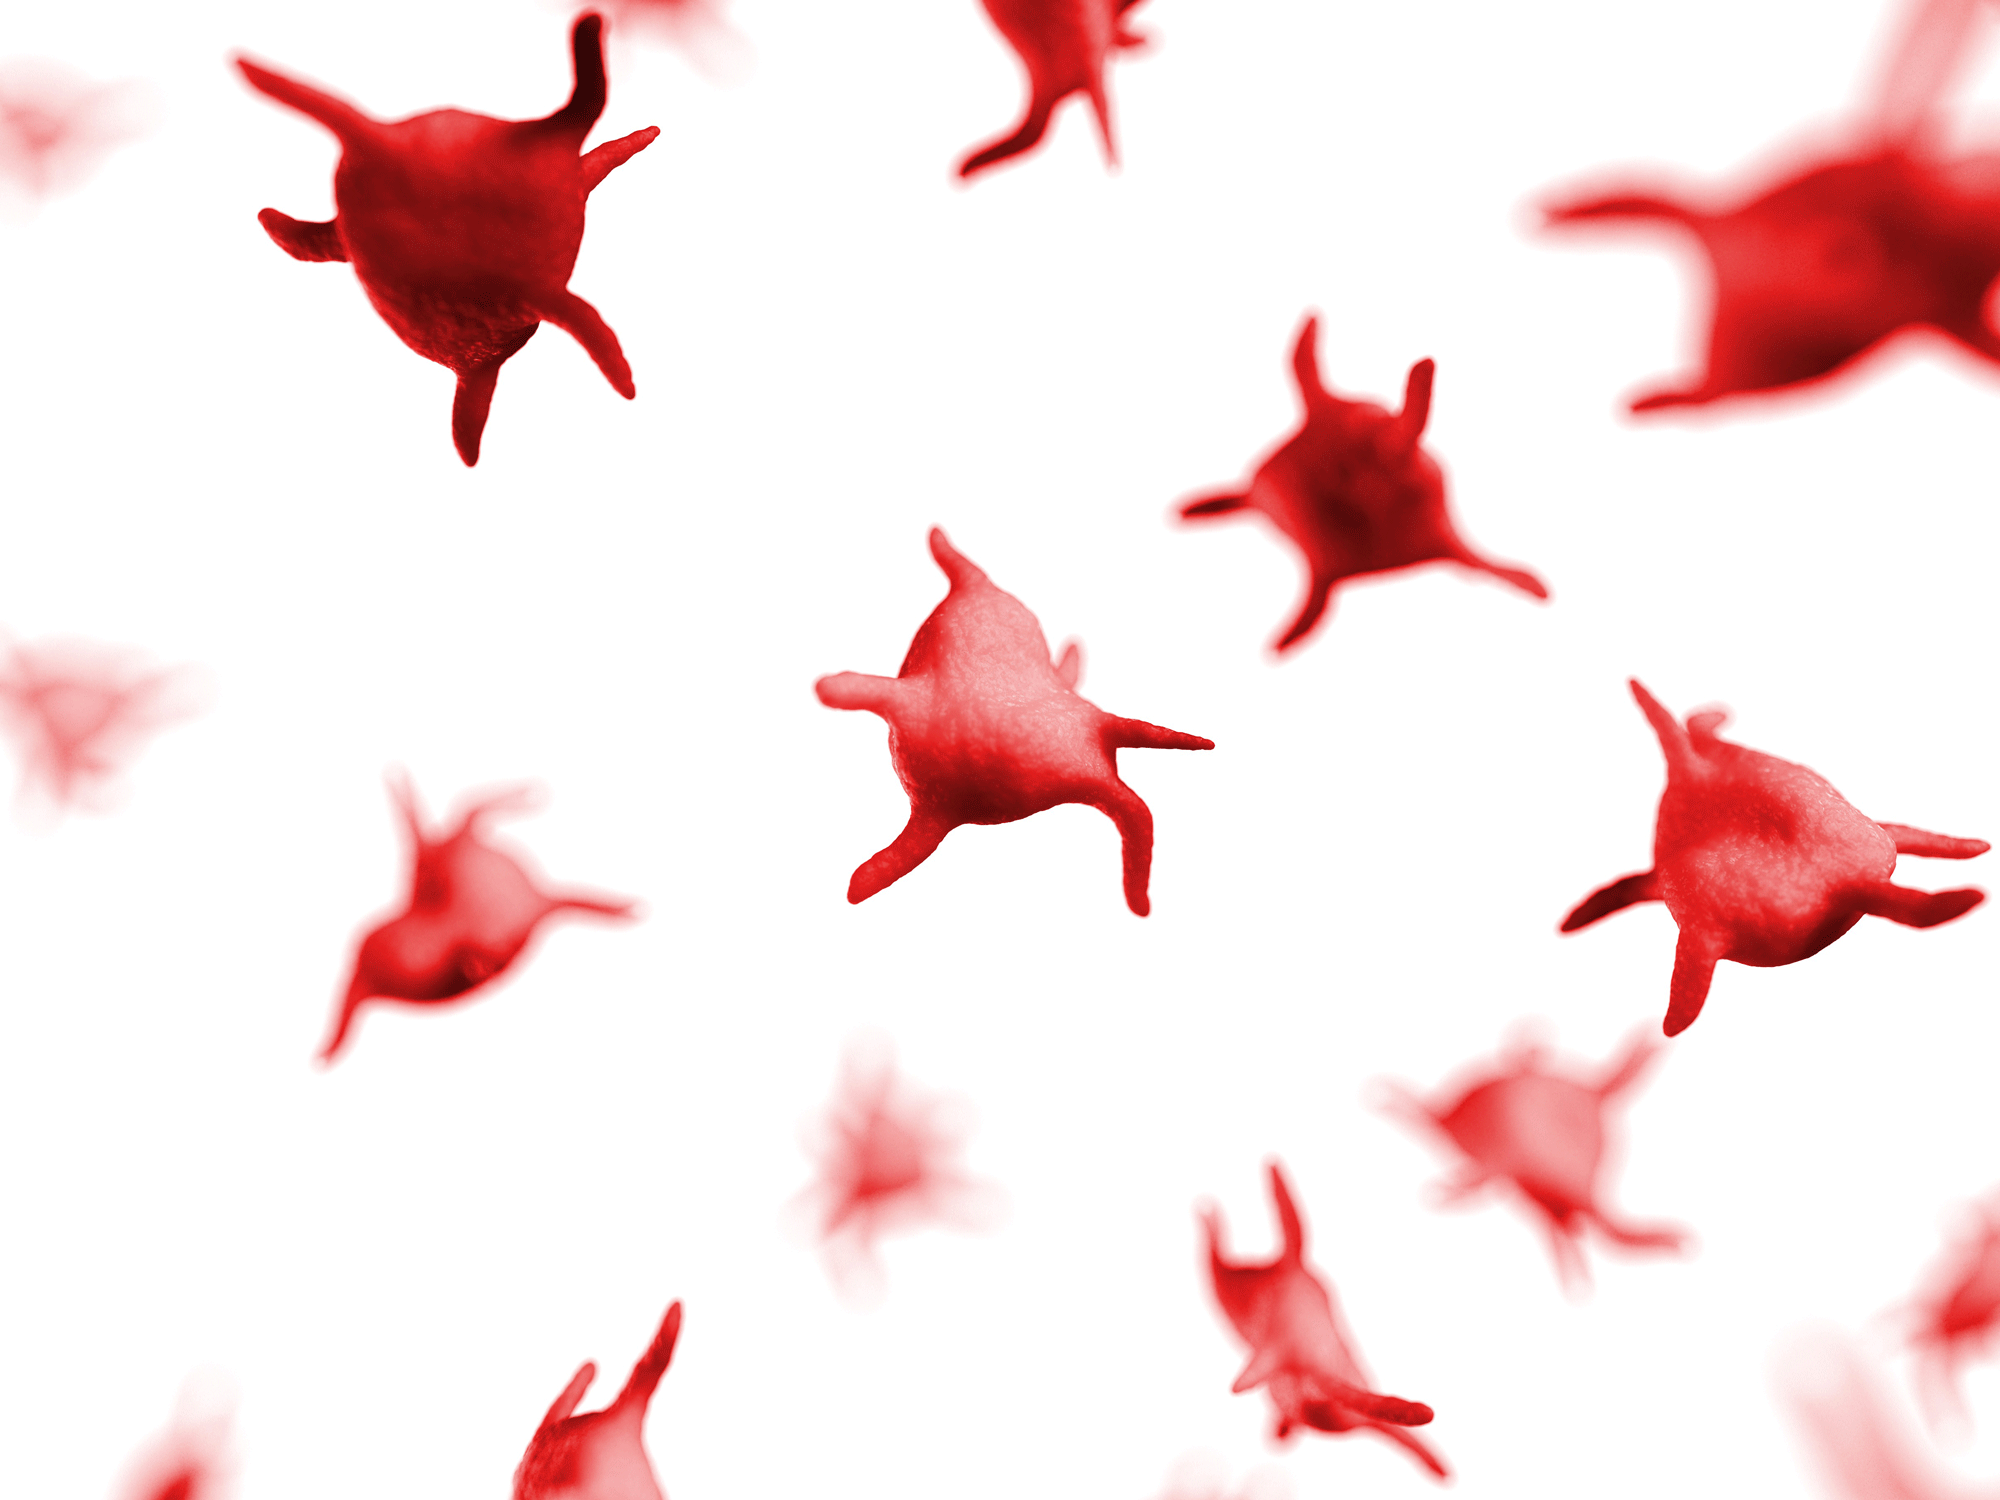 Plaquettes sanguines, image d'illustration. [SKU / Science Photo Library]